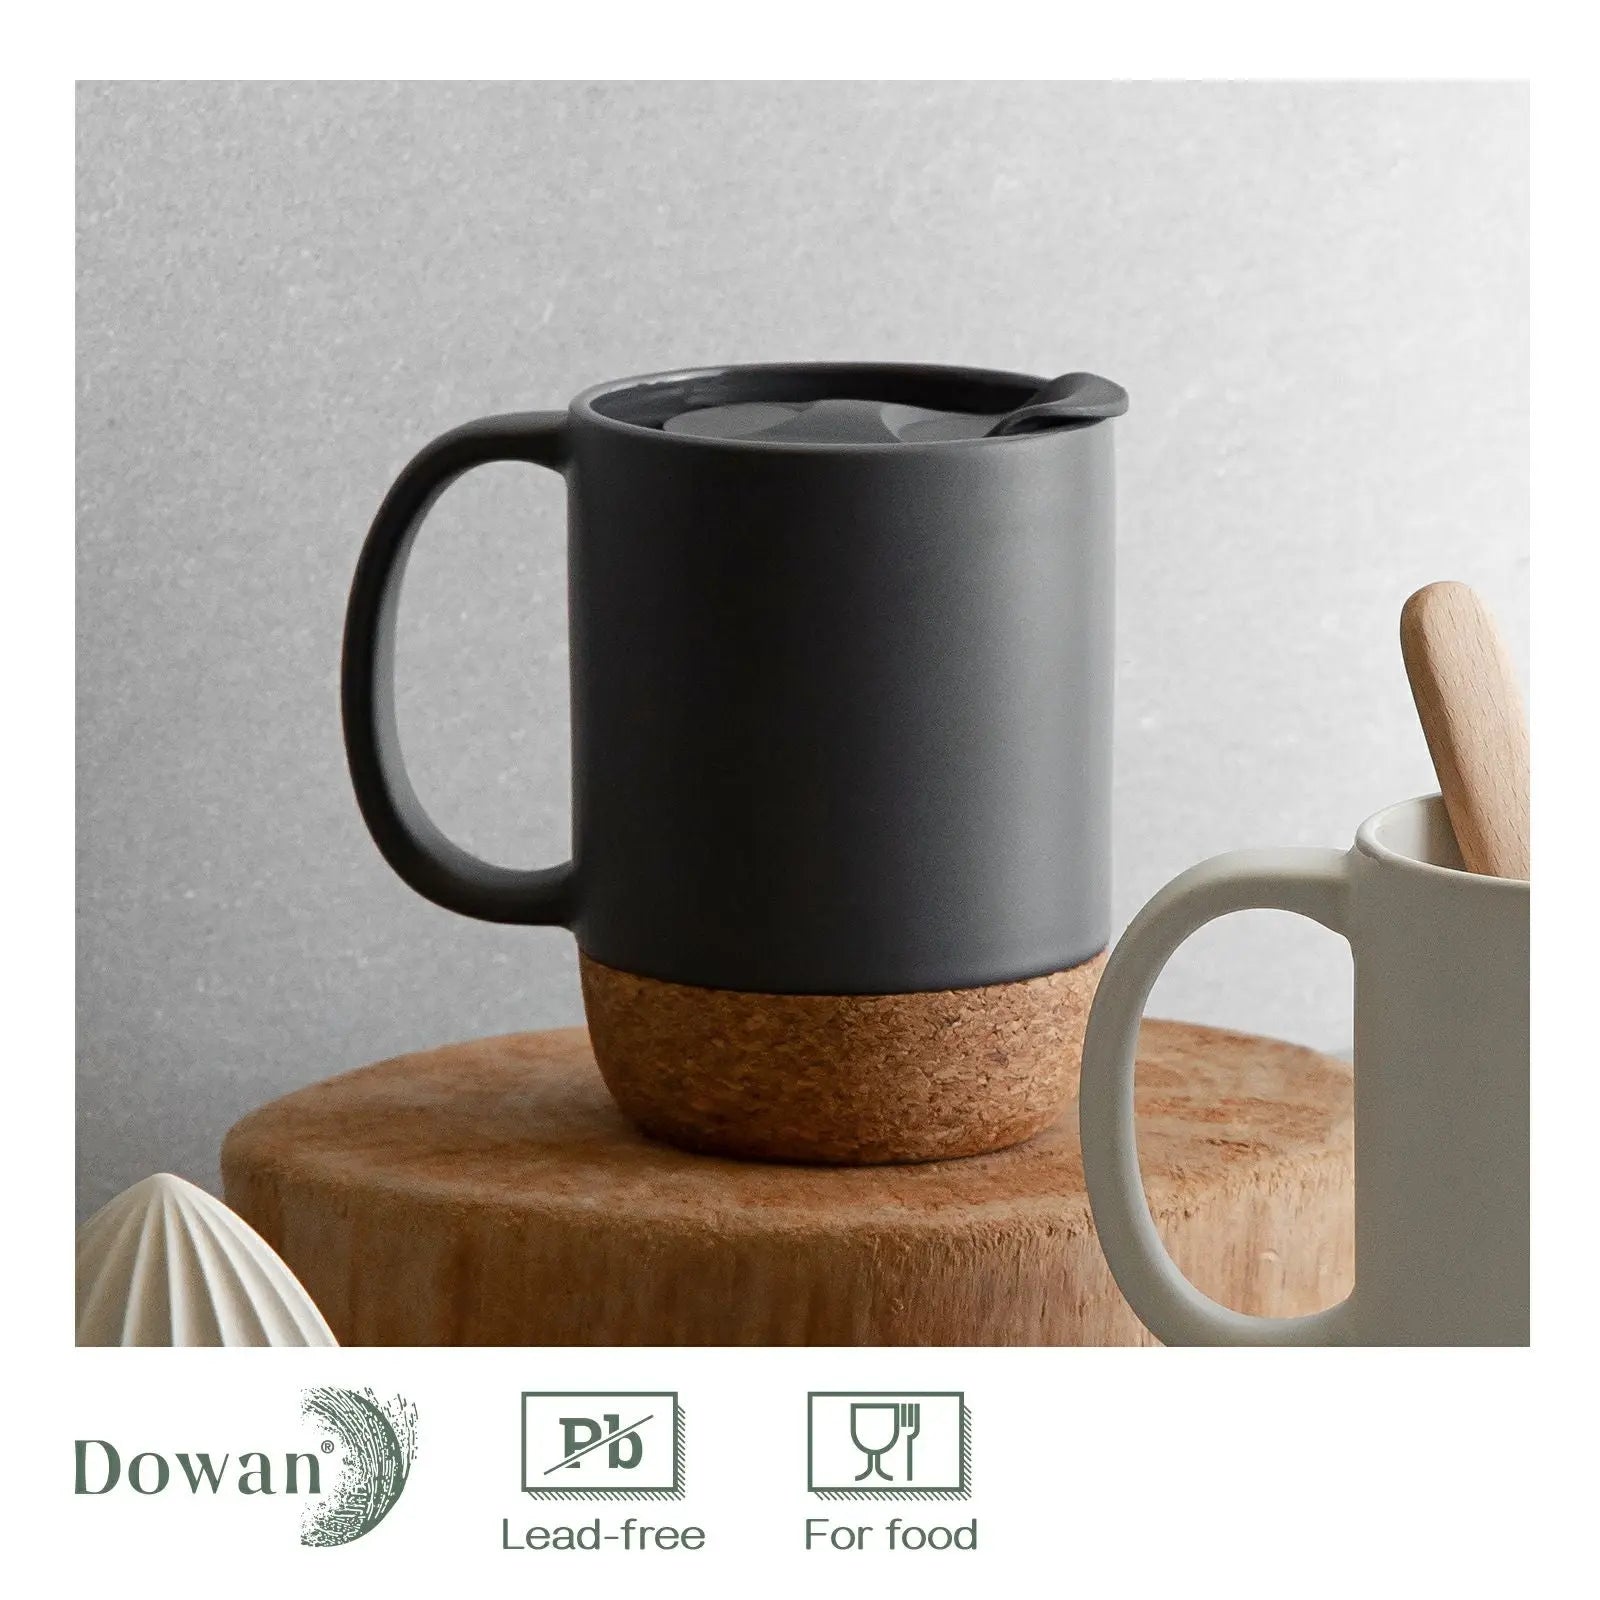 DOWAN Coffee Mugs, 15 oz Mug Set of 2, Large Ceramic Coffee Mug with Cork  Bottom and Spill Proof Lid…See more DOWAN Coffee Mugs, 15 oz Mug Set of 2